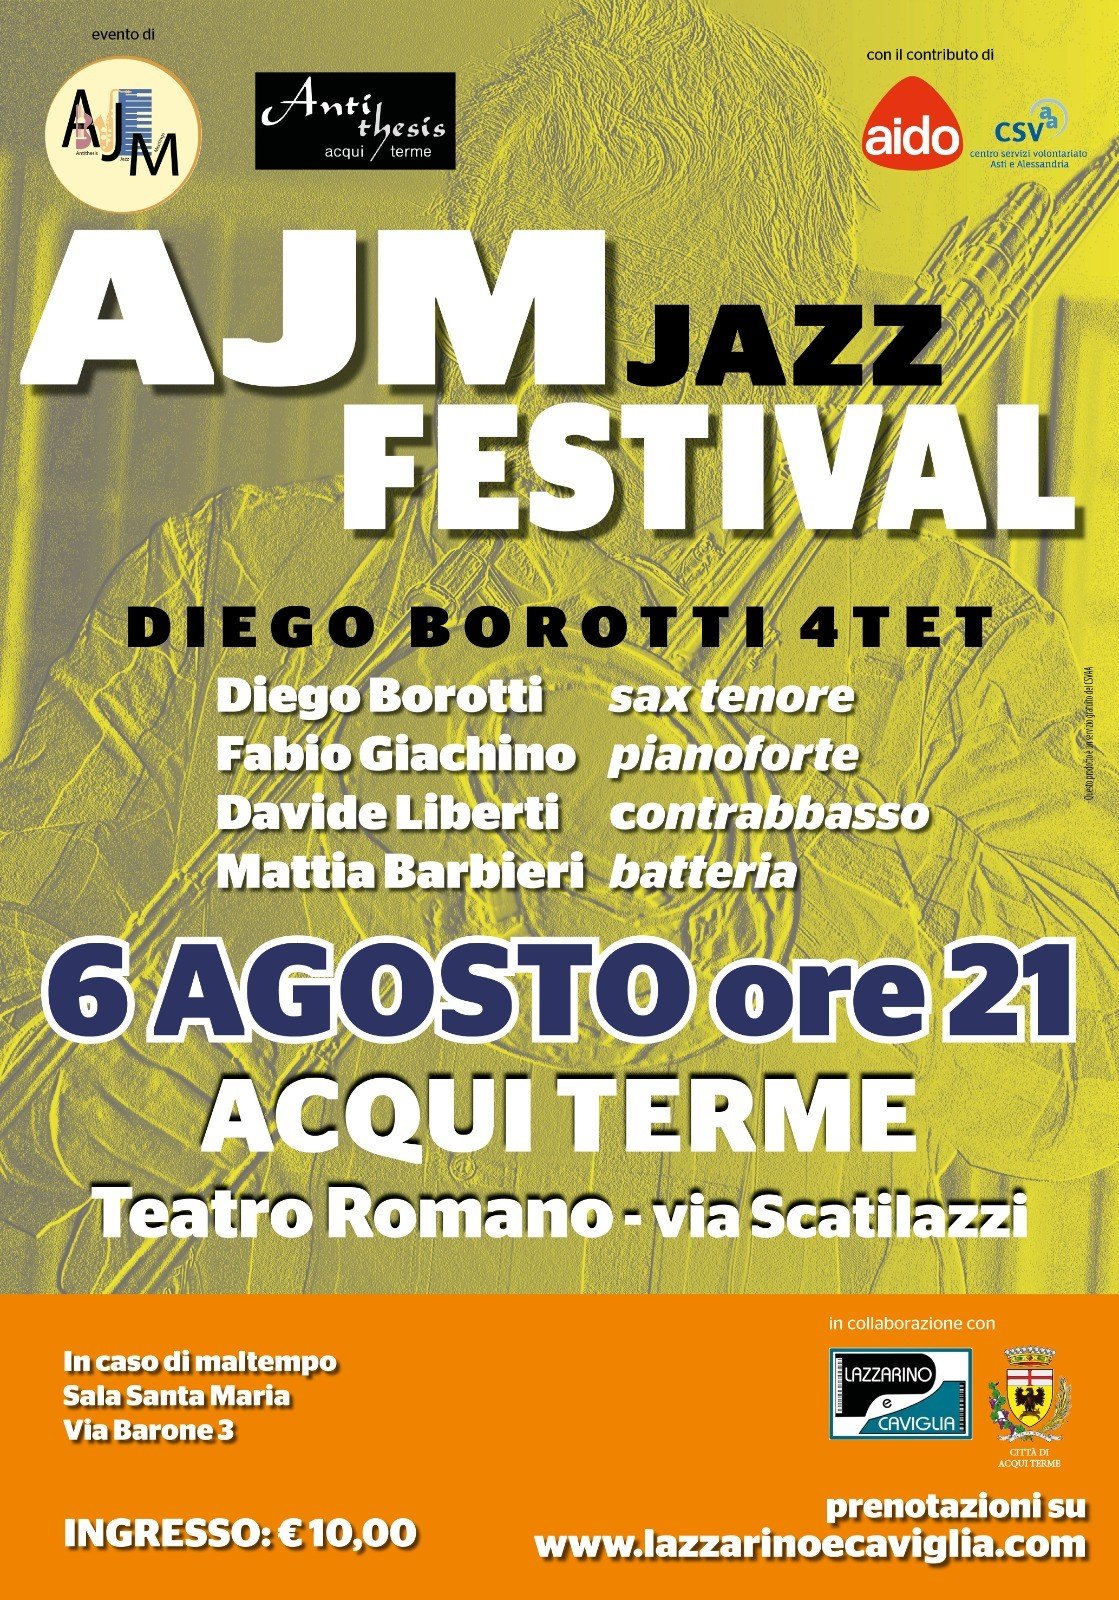 Sabato 6 agosto ad Acqui Terme Diego Borotti Quartet per l’AJM Jazz Festival